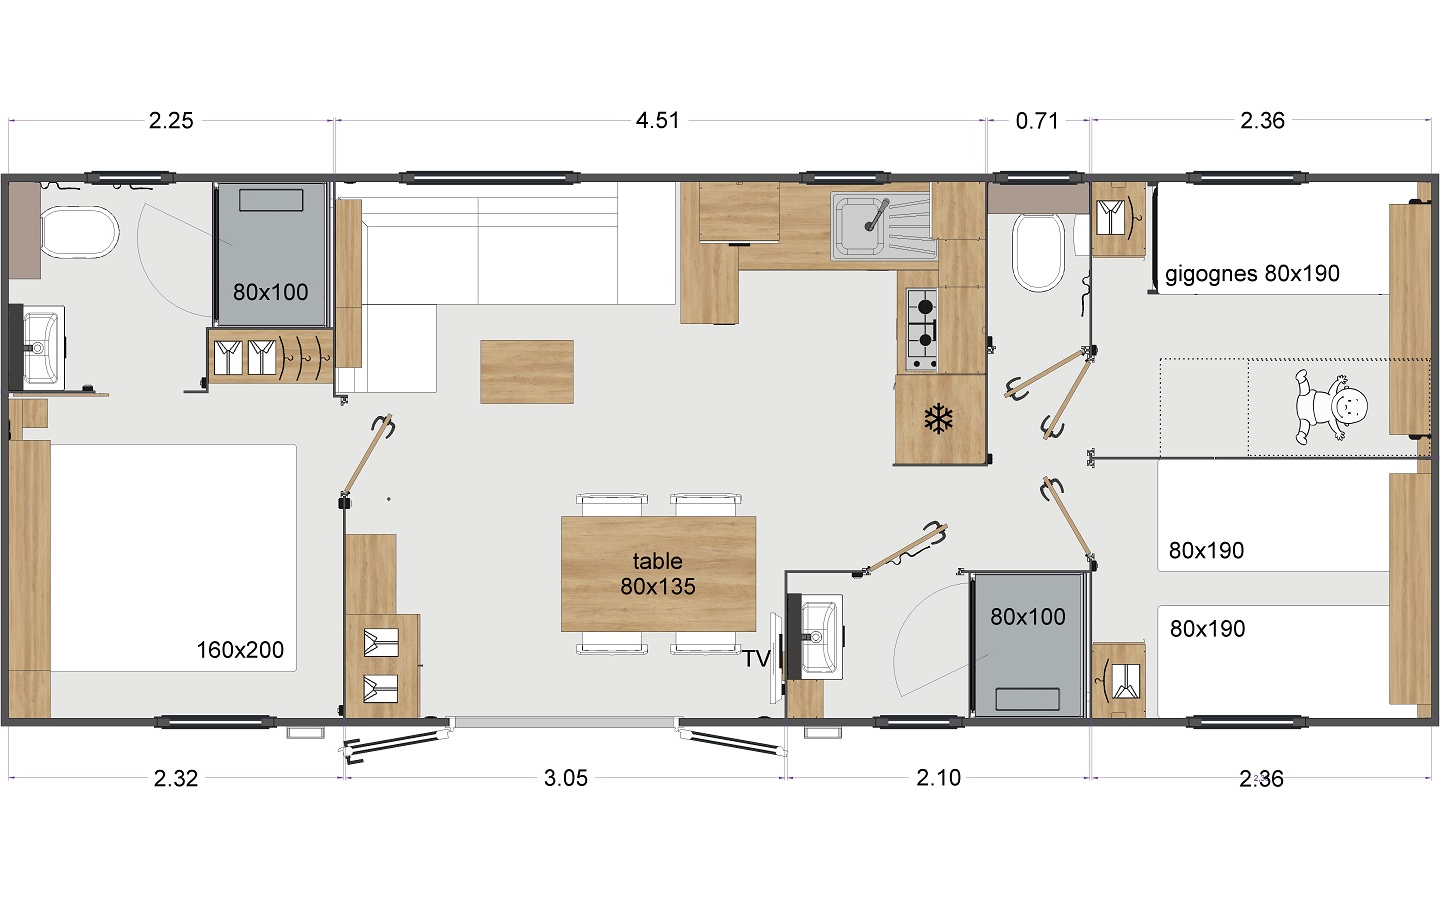 cottage prenium 3 chambres - plan